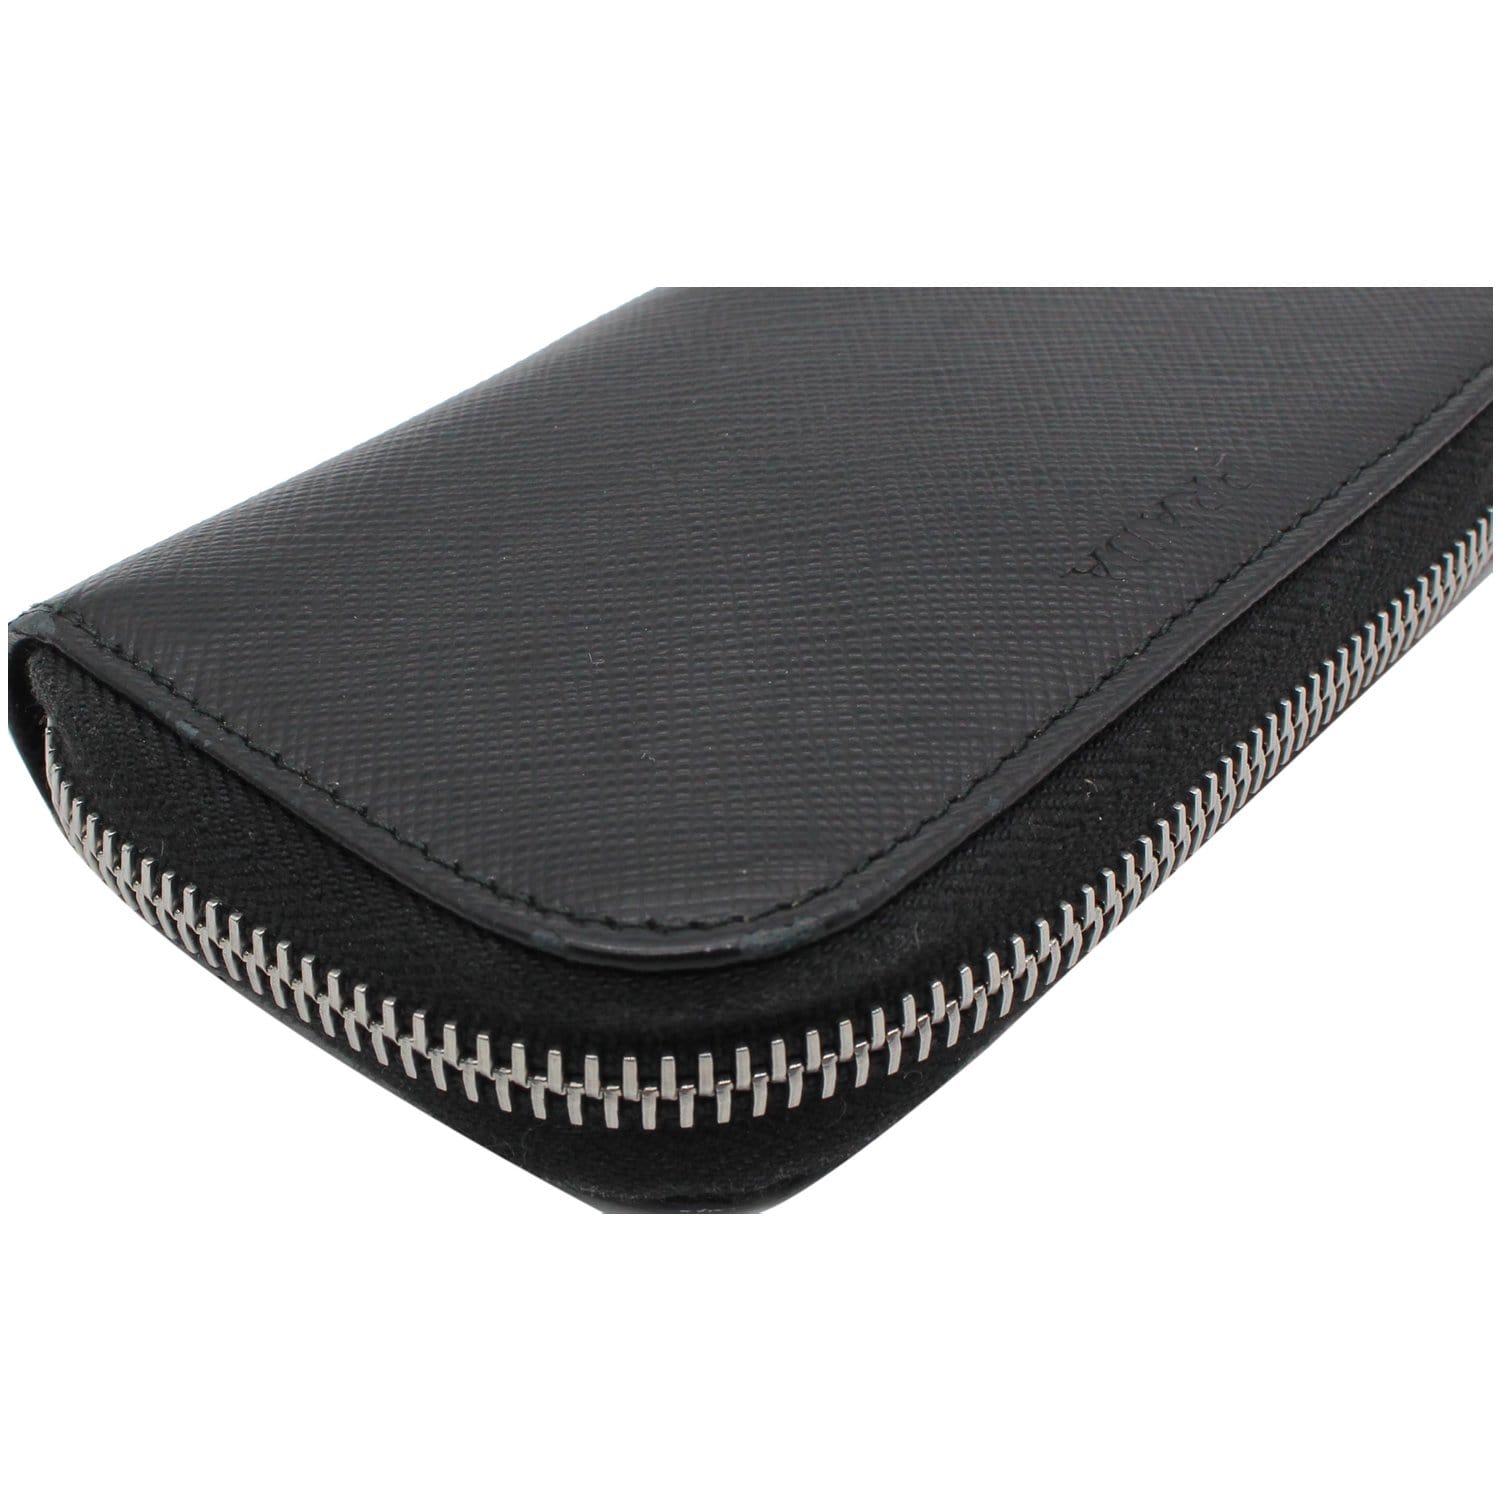 PRADA Saffiano Leather Key Case Holder Black - Final Sale